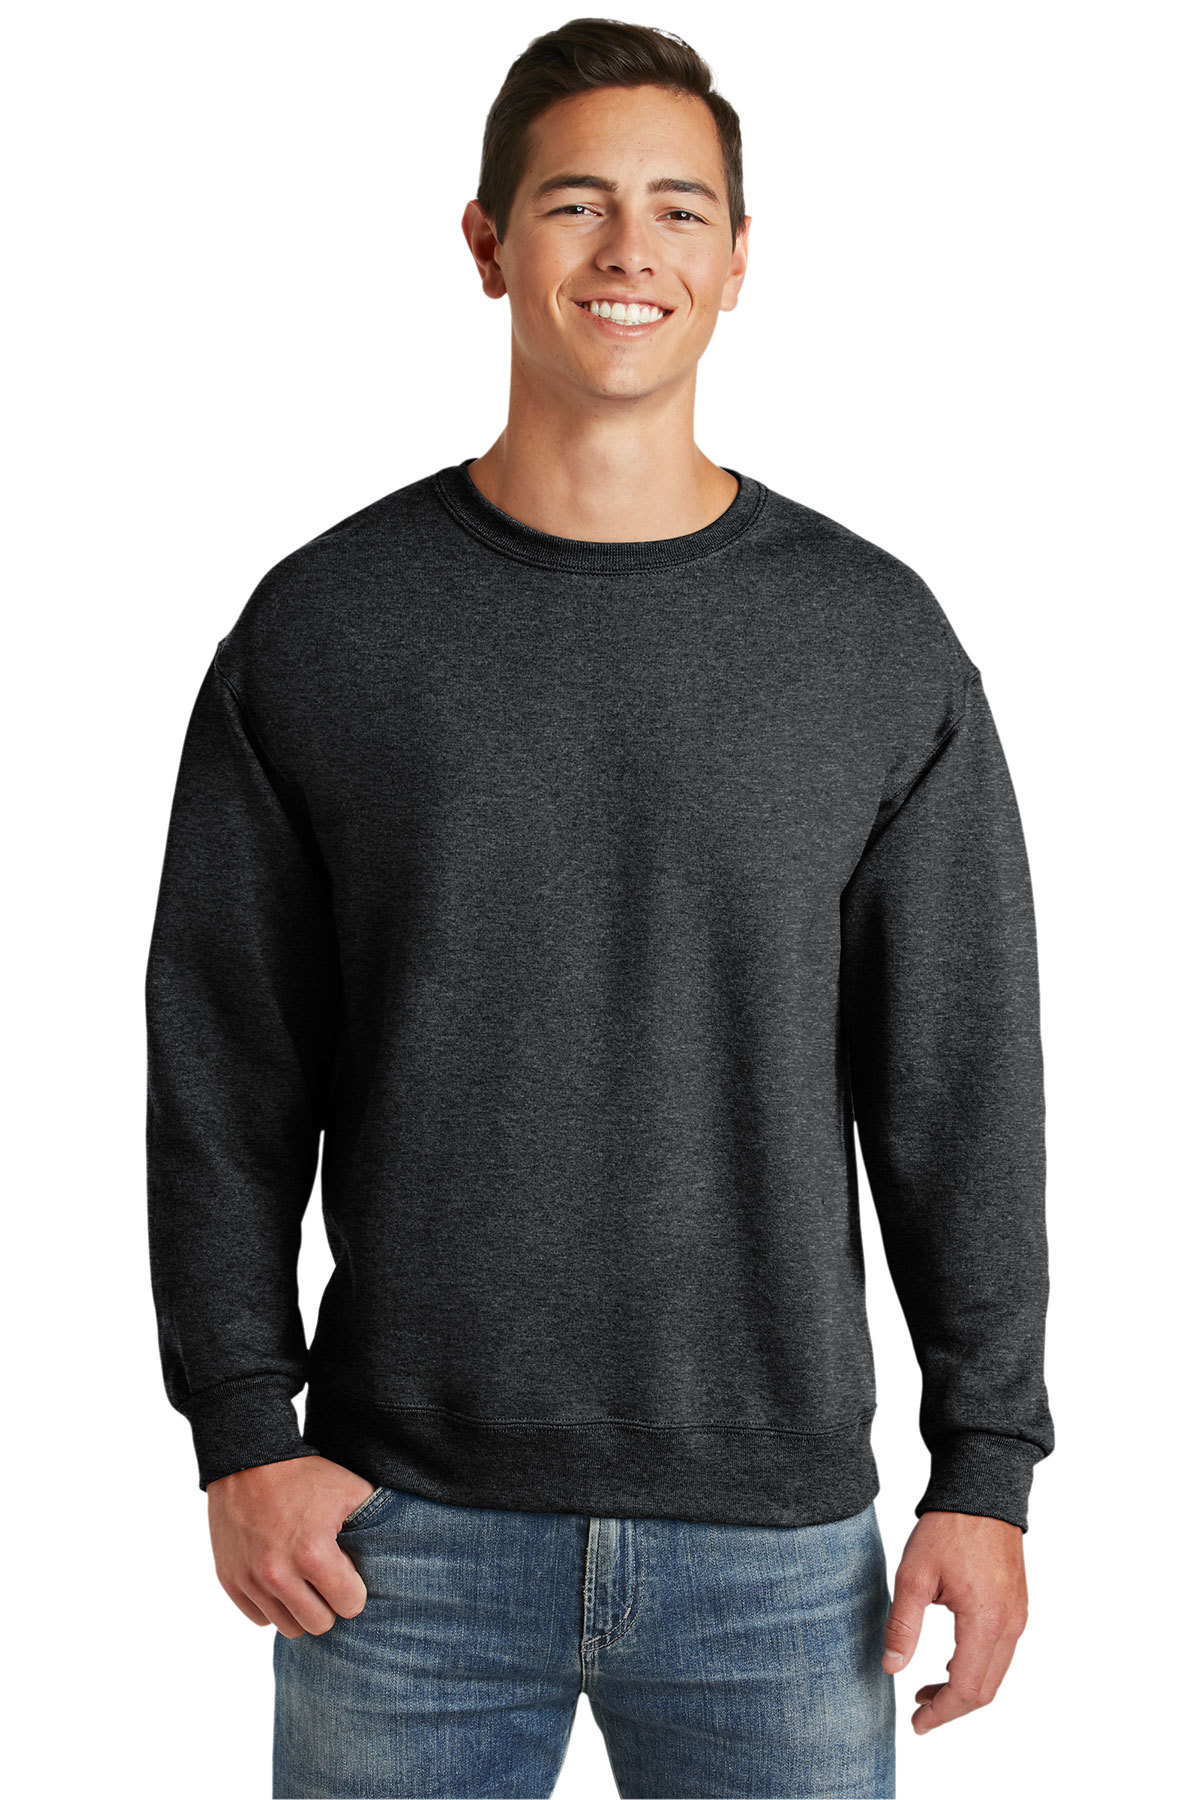 SanMar - | Product Crewneck Sweats Sweatshirt Super NuBlend | Jerzees